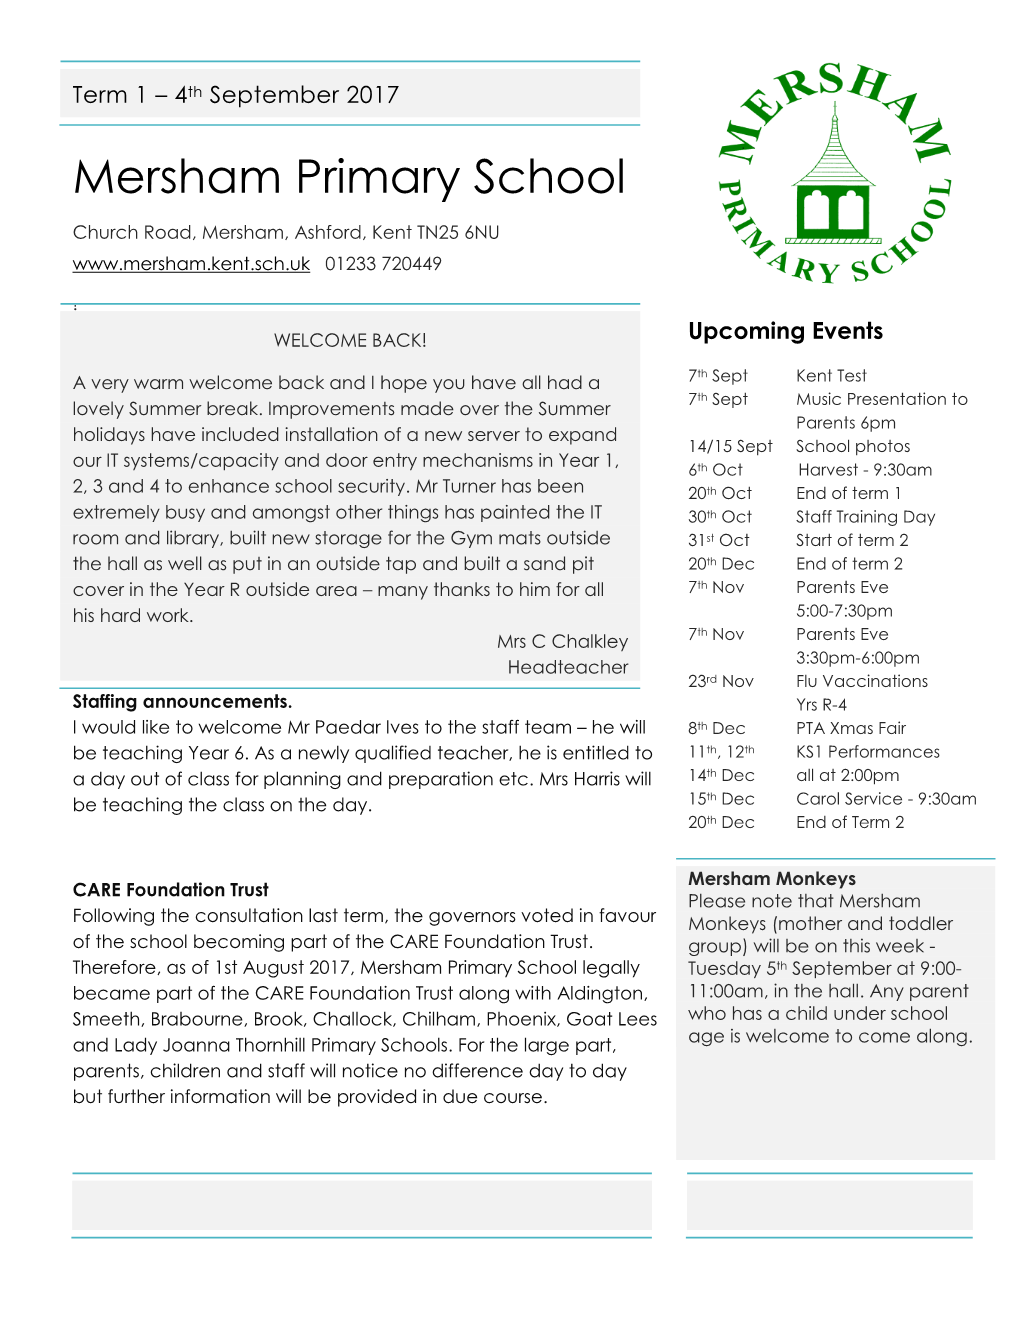 Mersham Primary School